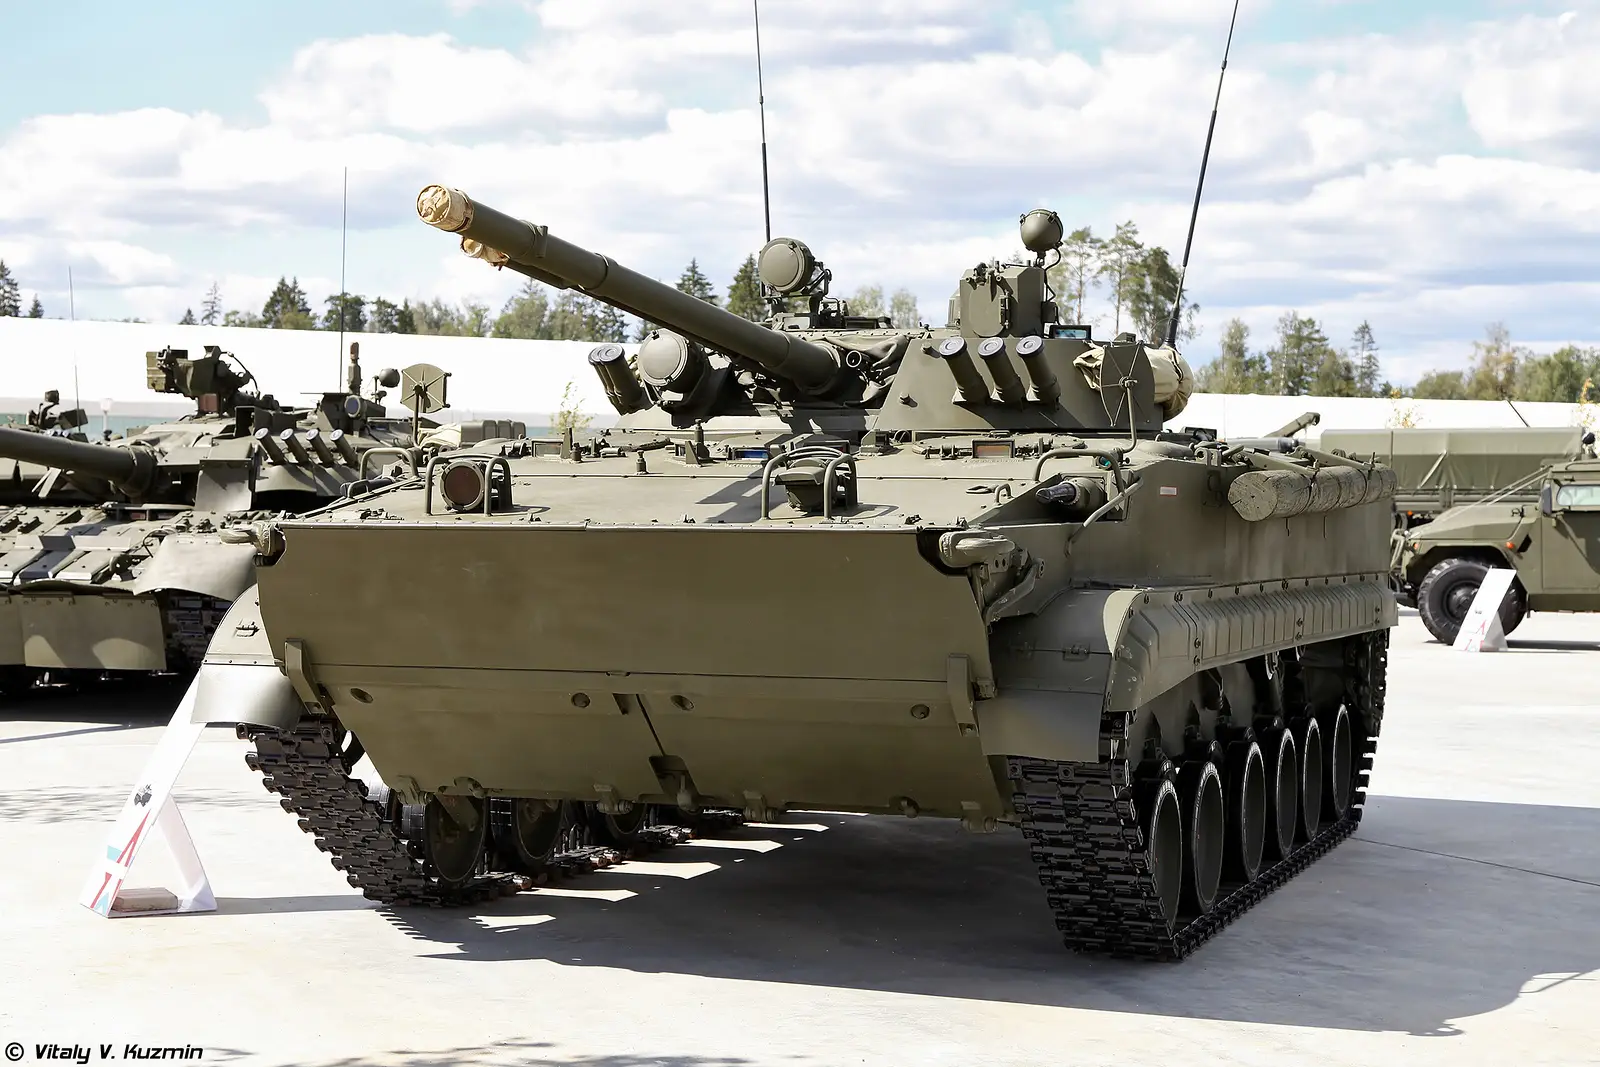 BMP-3: The powerful Russian IFV - GEOPOLITIKI.COM